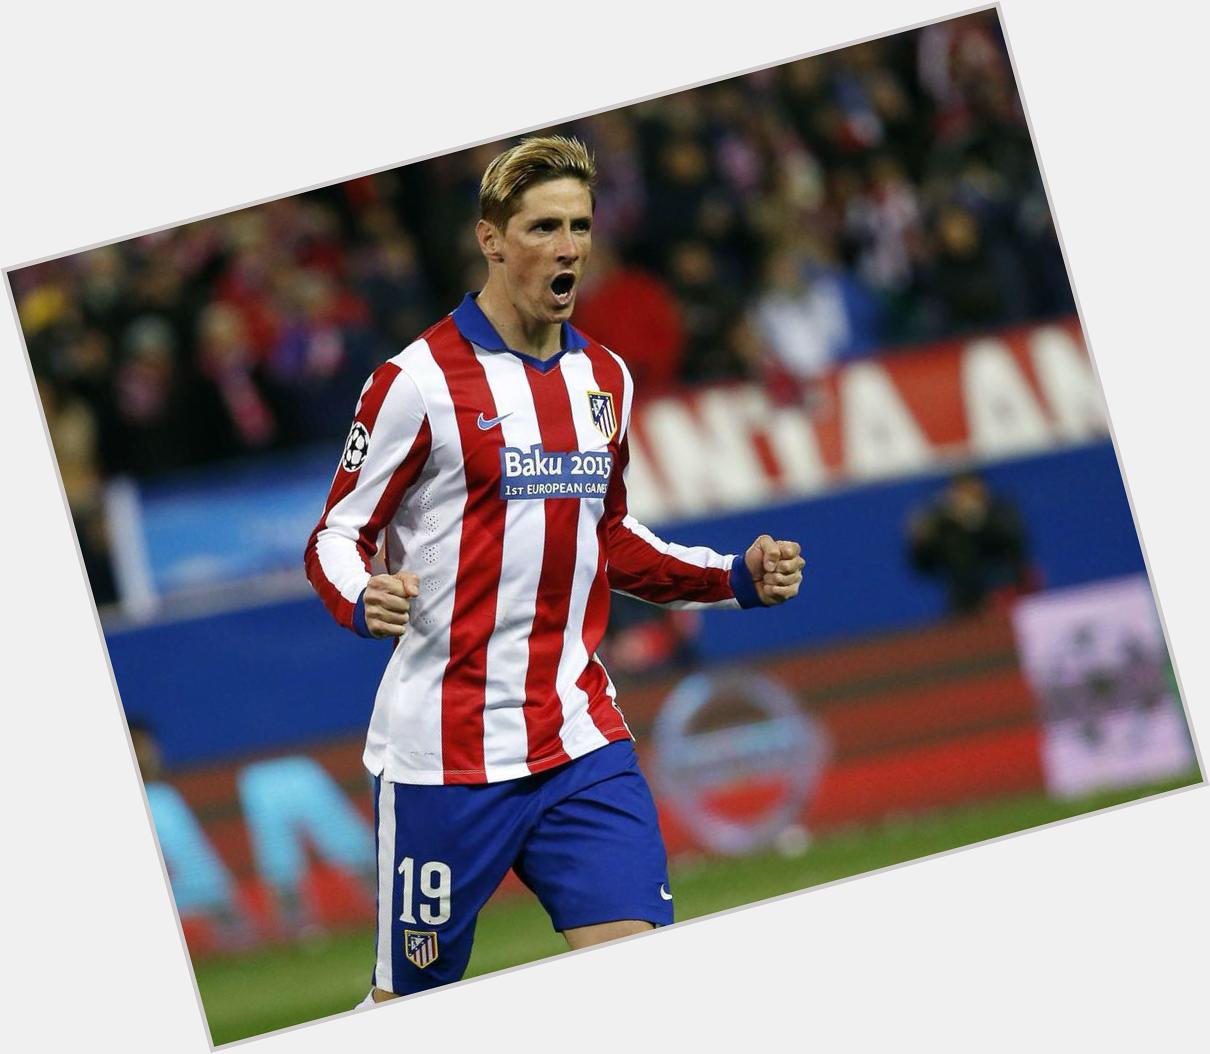 Wishing Fernando Torres, Marcos Rojo and Paul Merson a very happy birthday! 